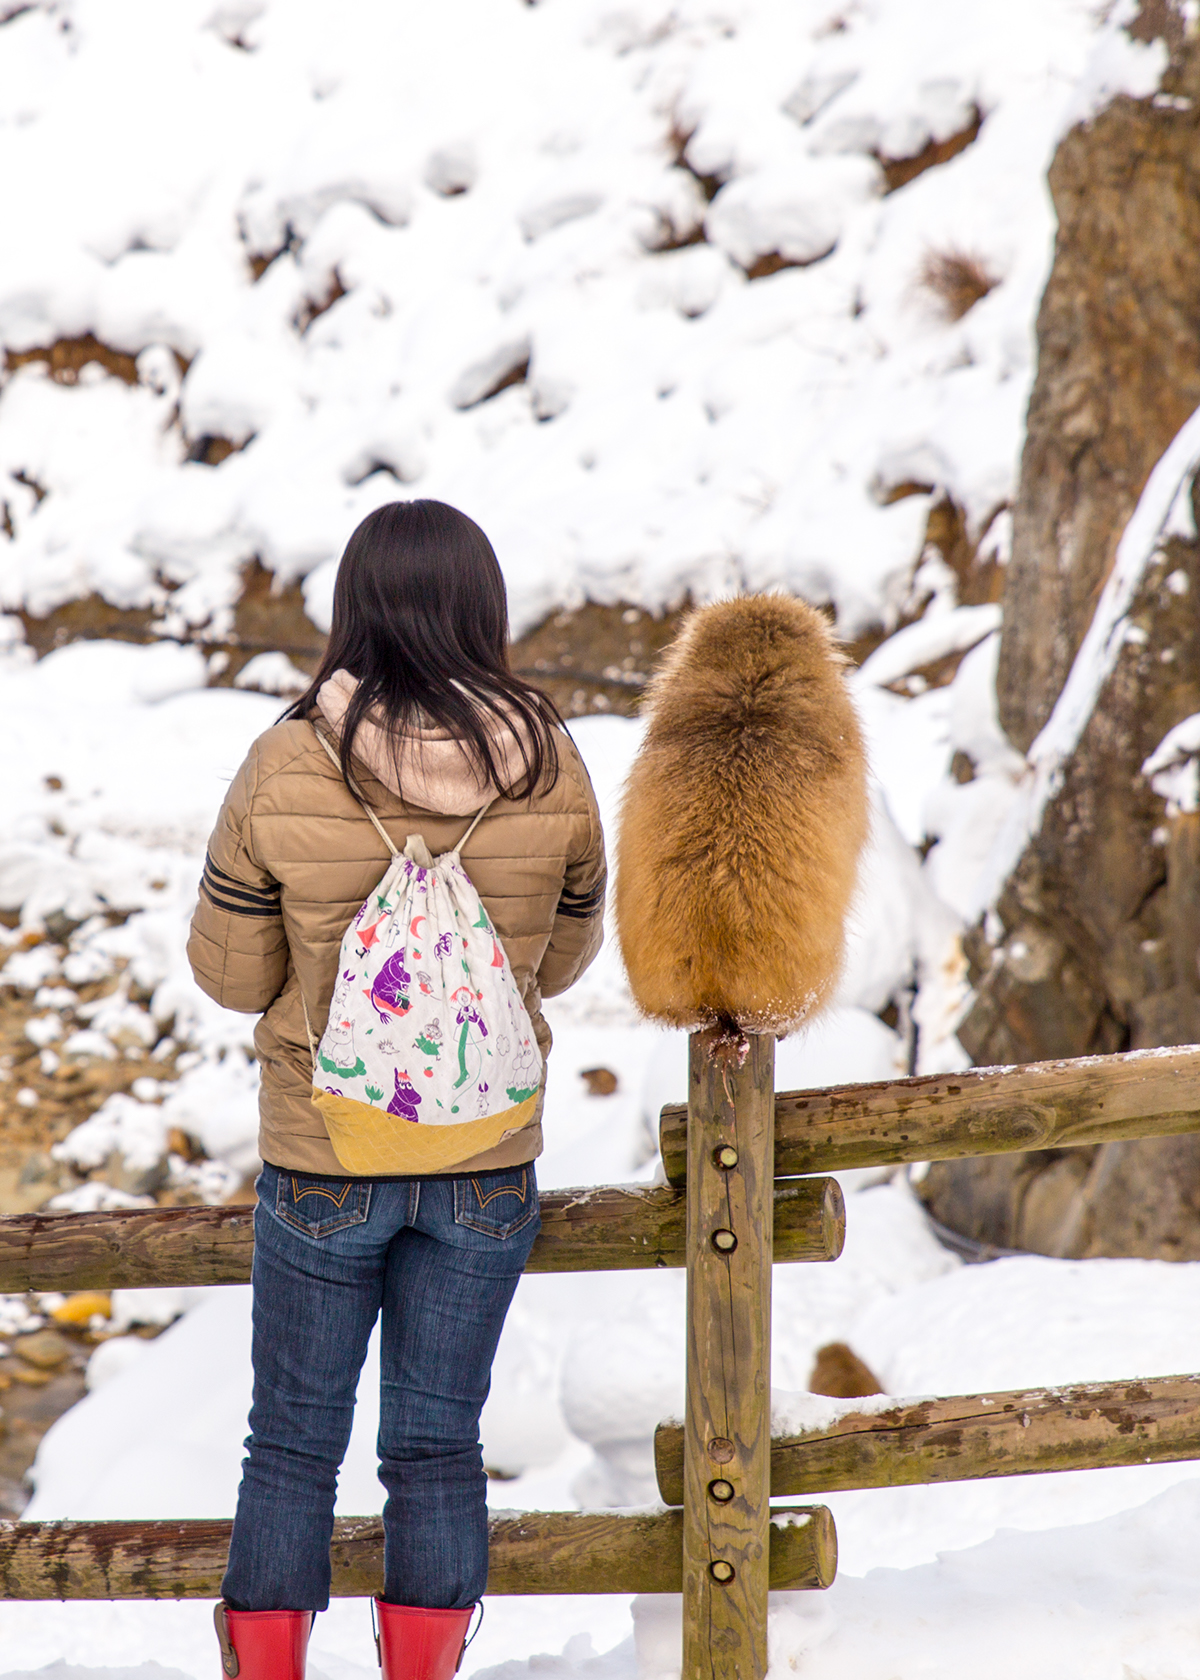 snow monkey Macques japan Japanese Macques Nagano snow tourism